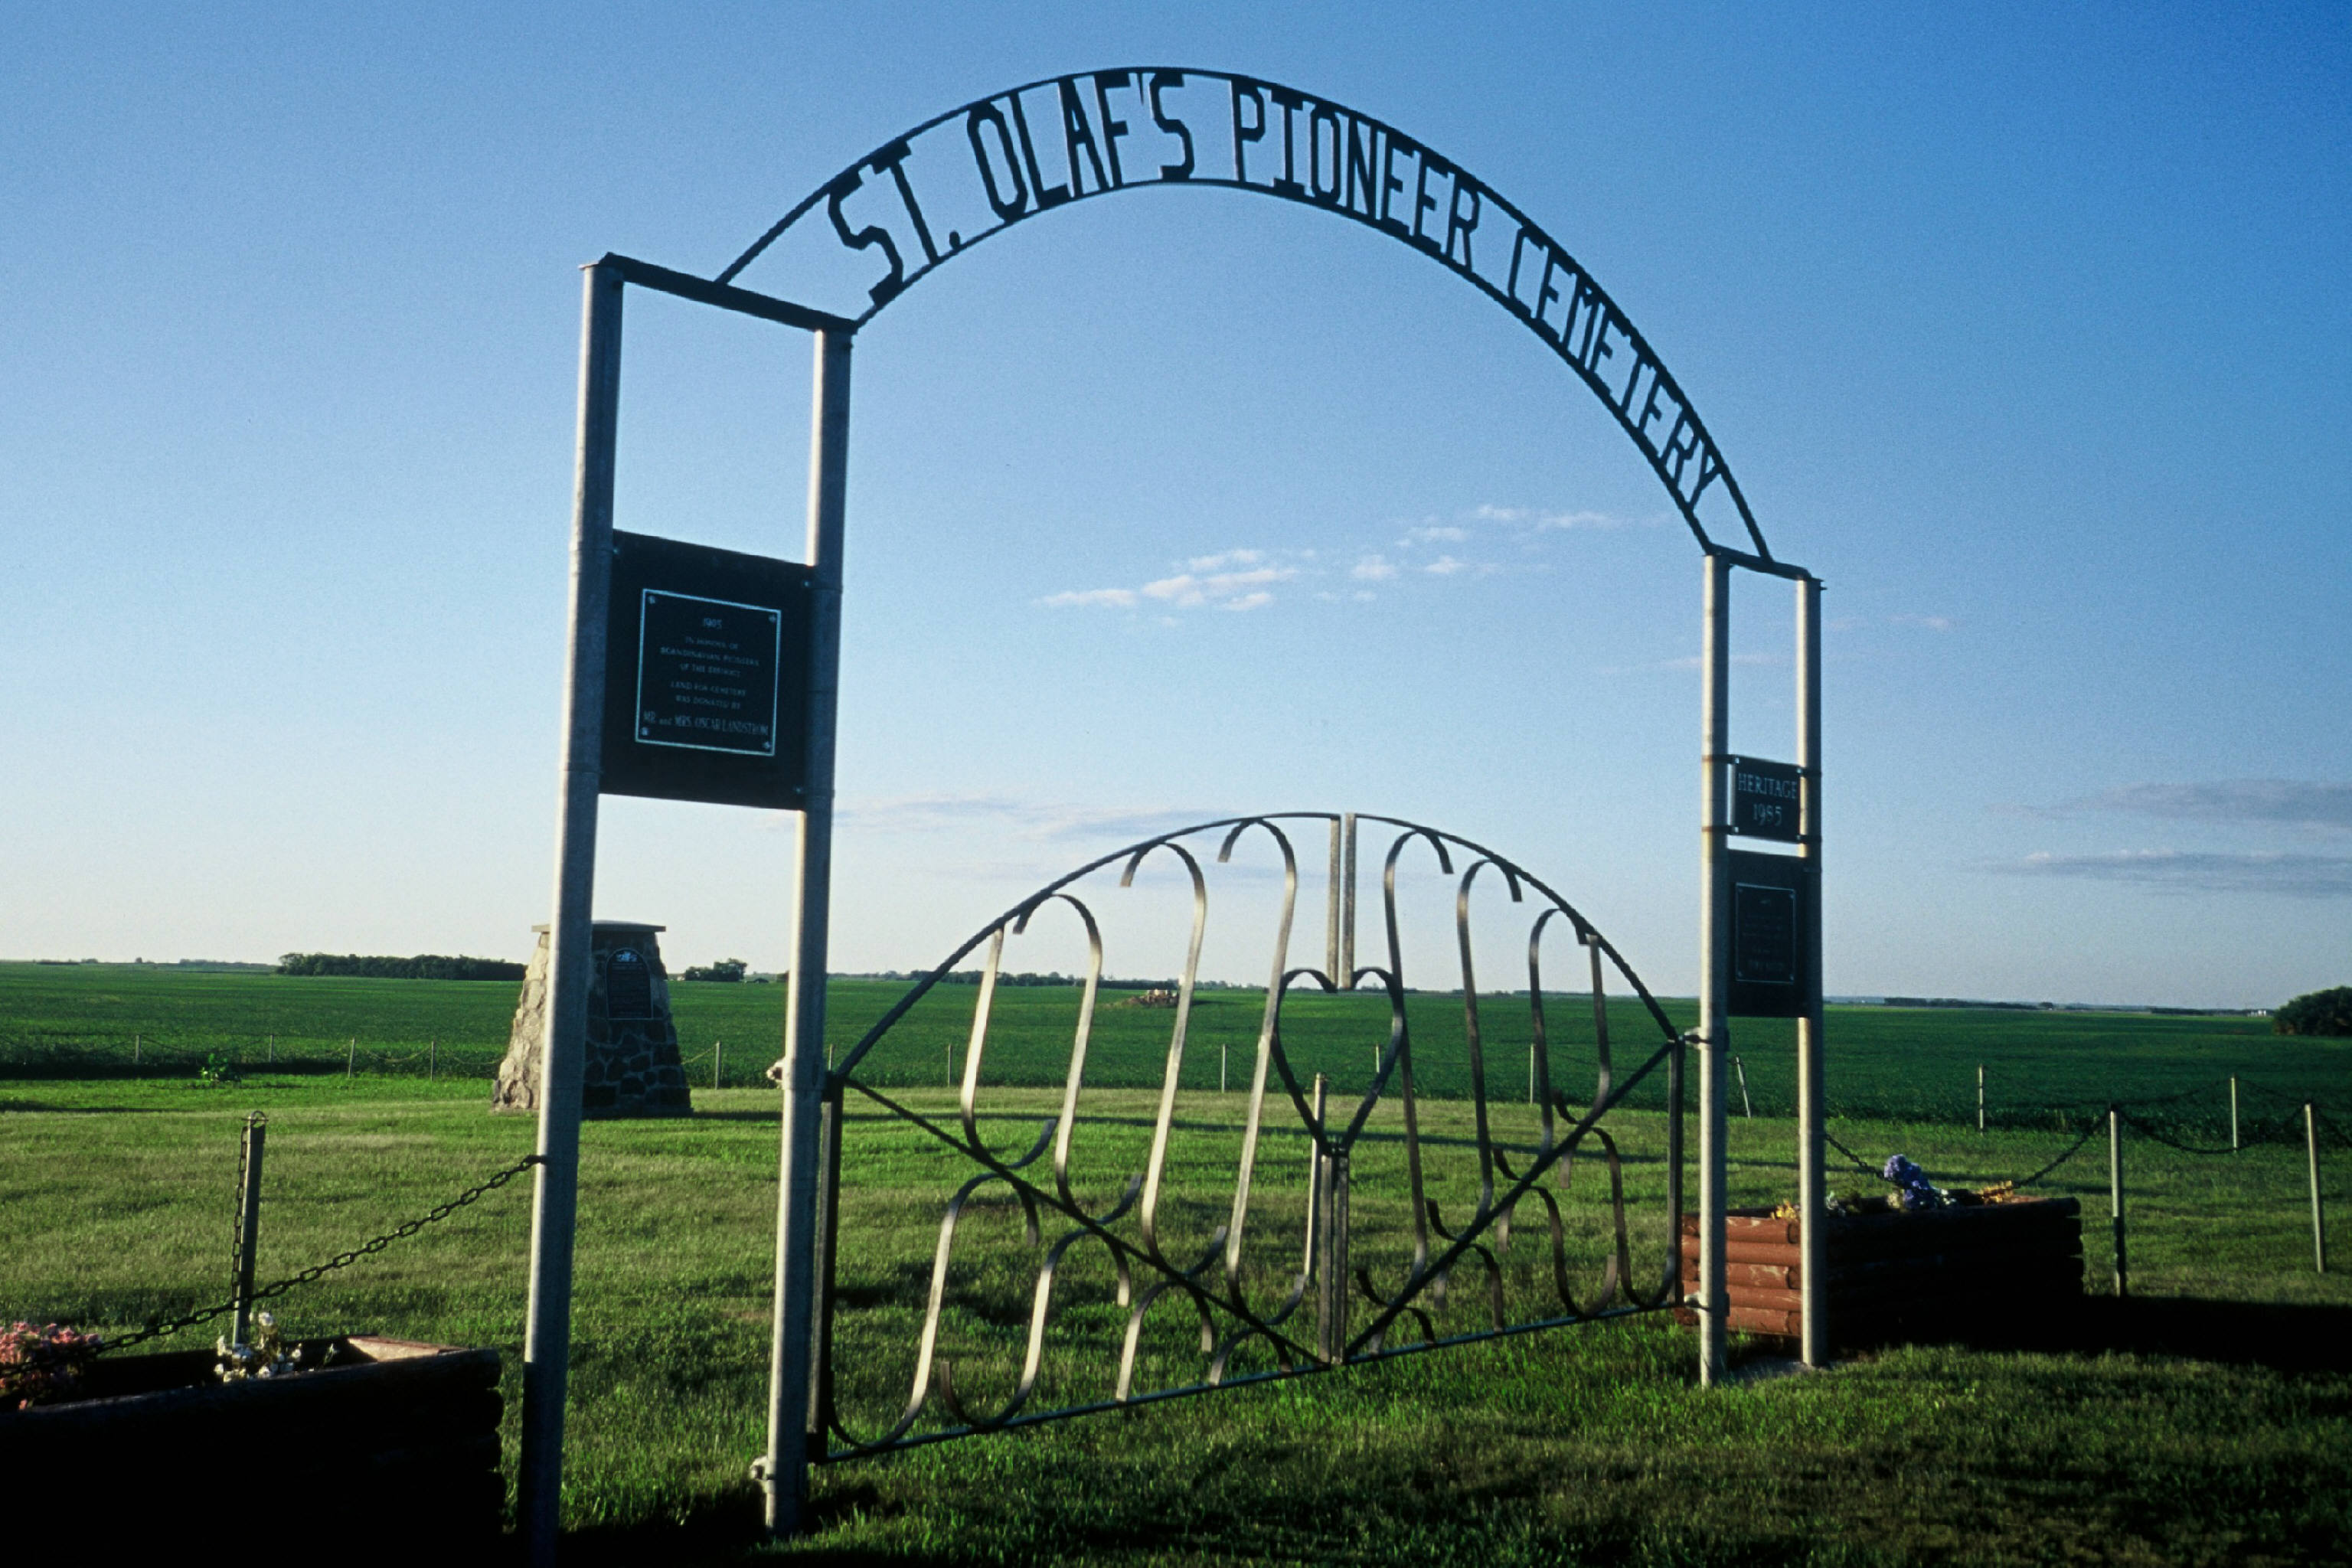 The Gates of St. Olafs